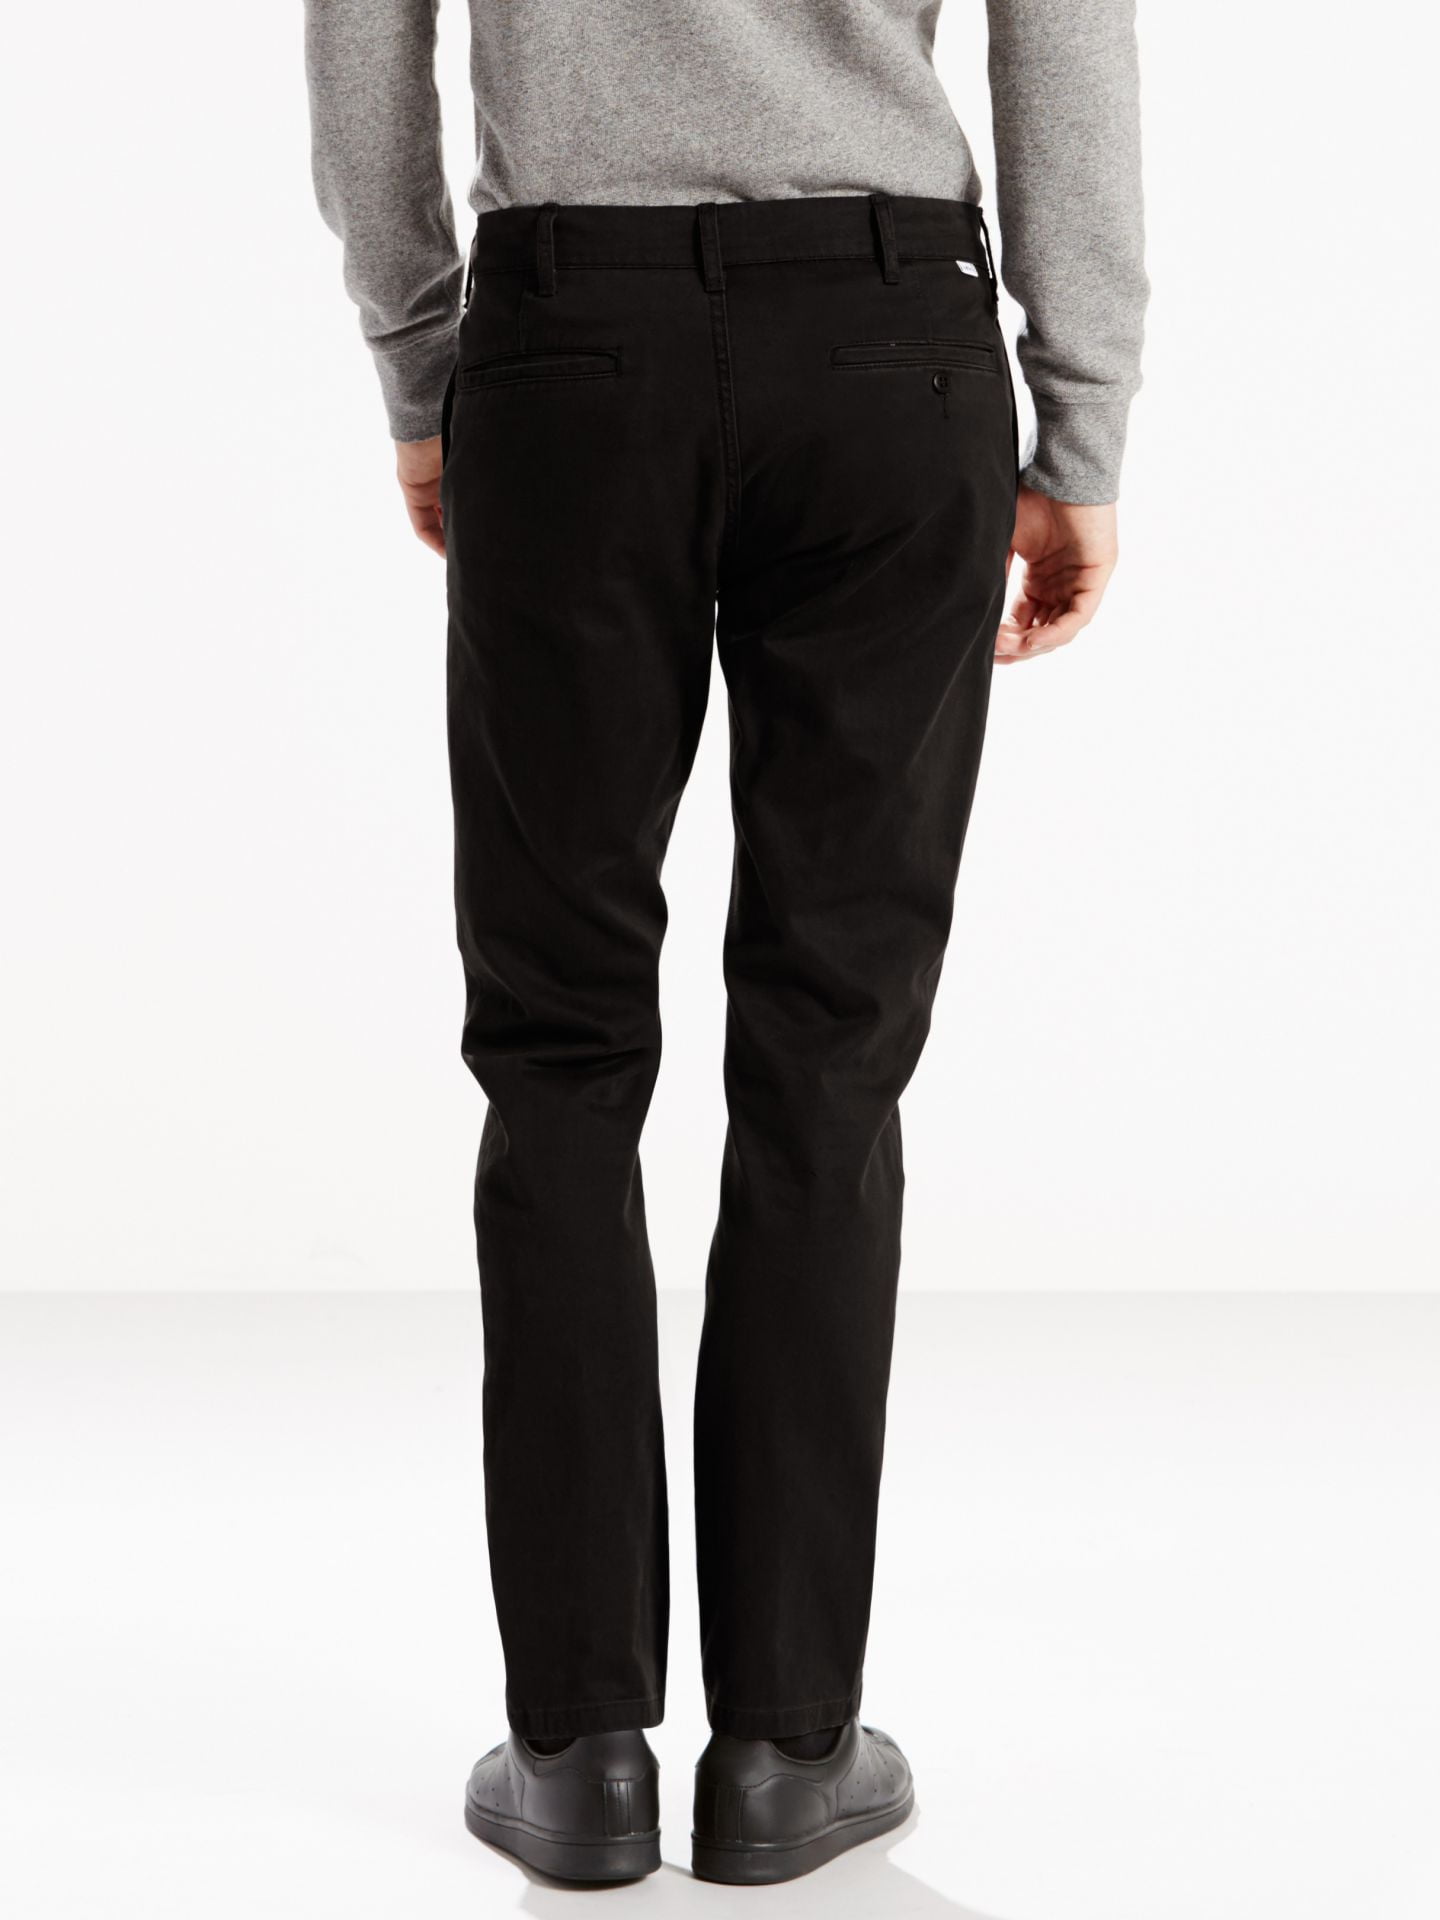 Levi's Men's 511 Slim Fit Chino Pants - Black, Black, 32X32 